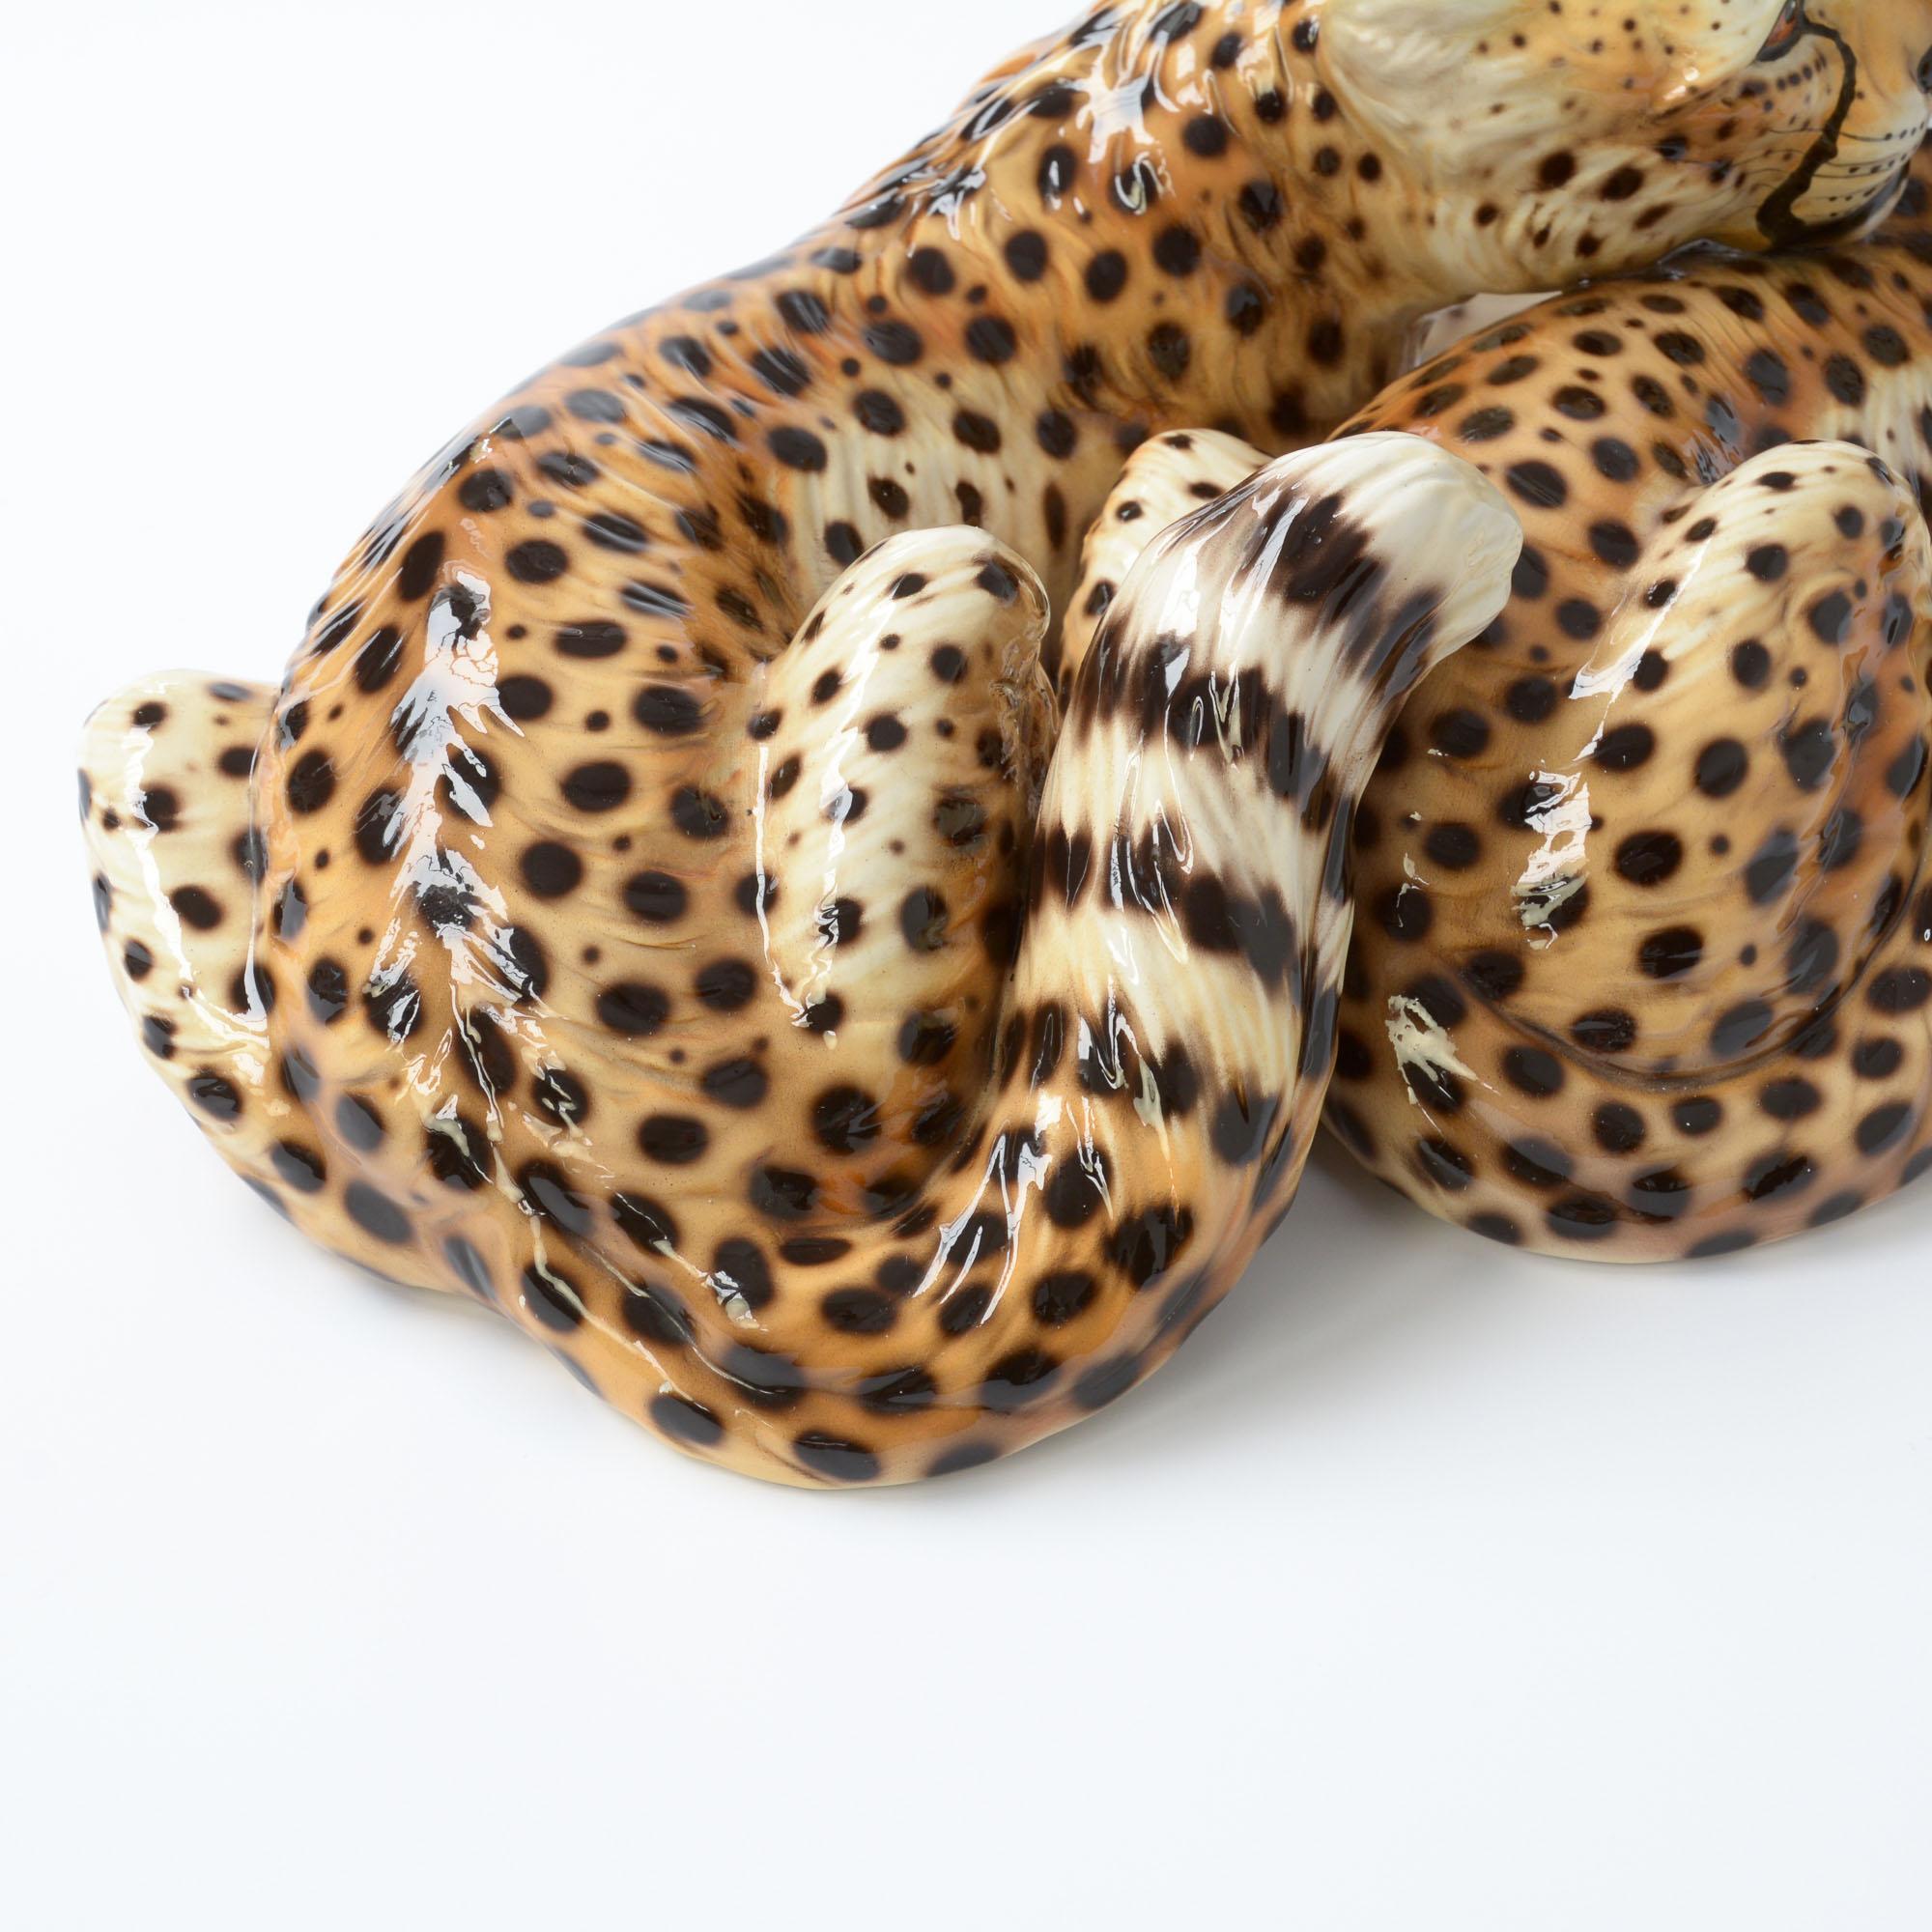 Porcelain Sculpture of Reclining Cheetahs by Ronzan, Italy 1